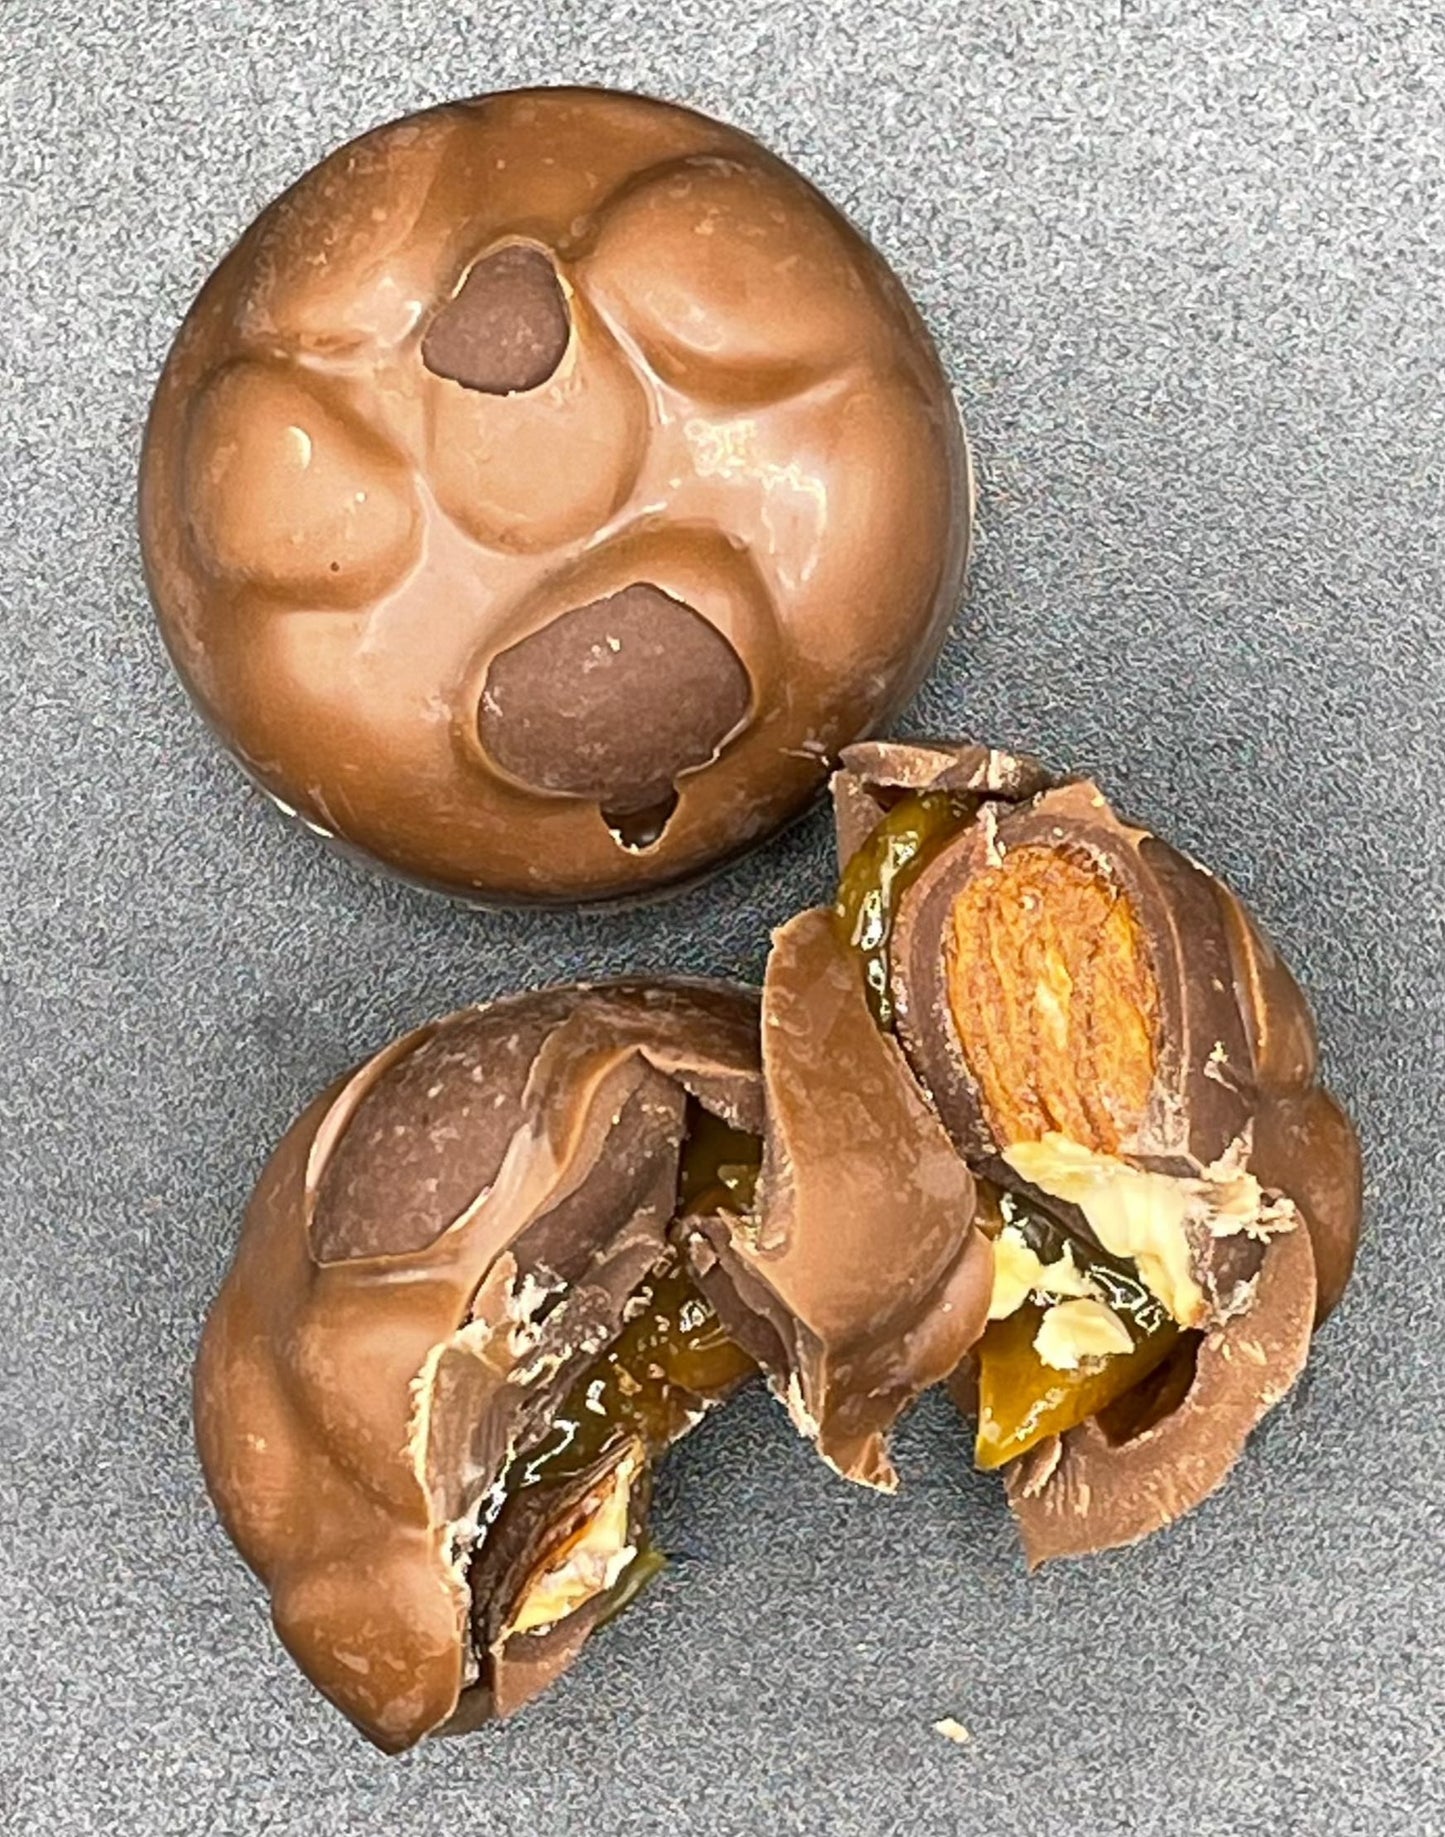 Wholesale Chocolate Almond Caramel Bites